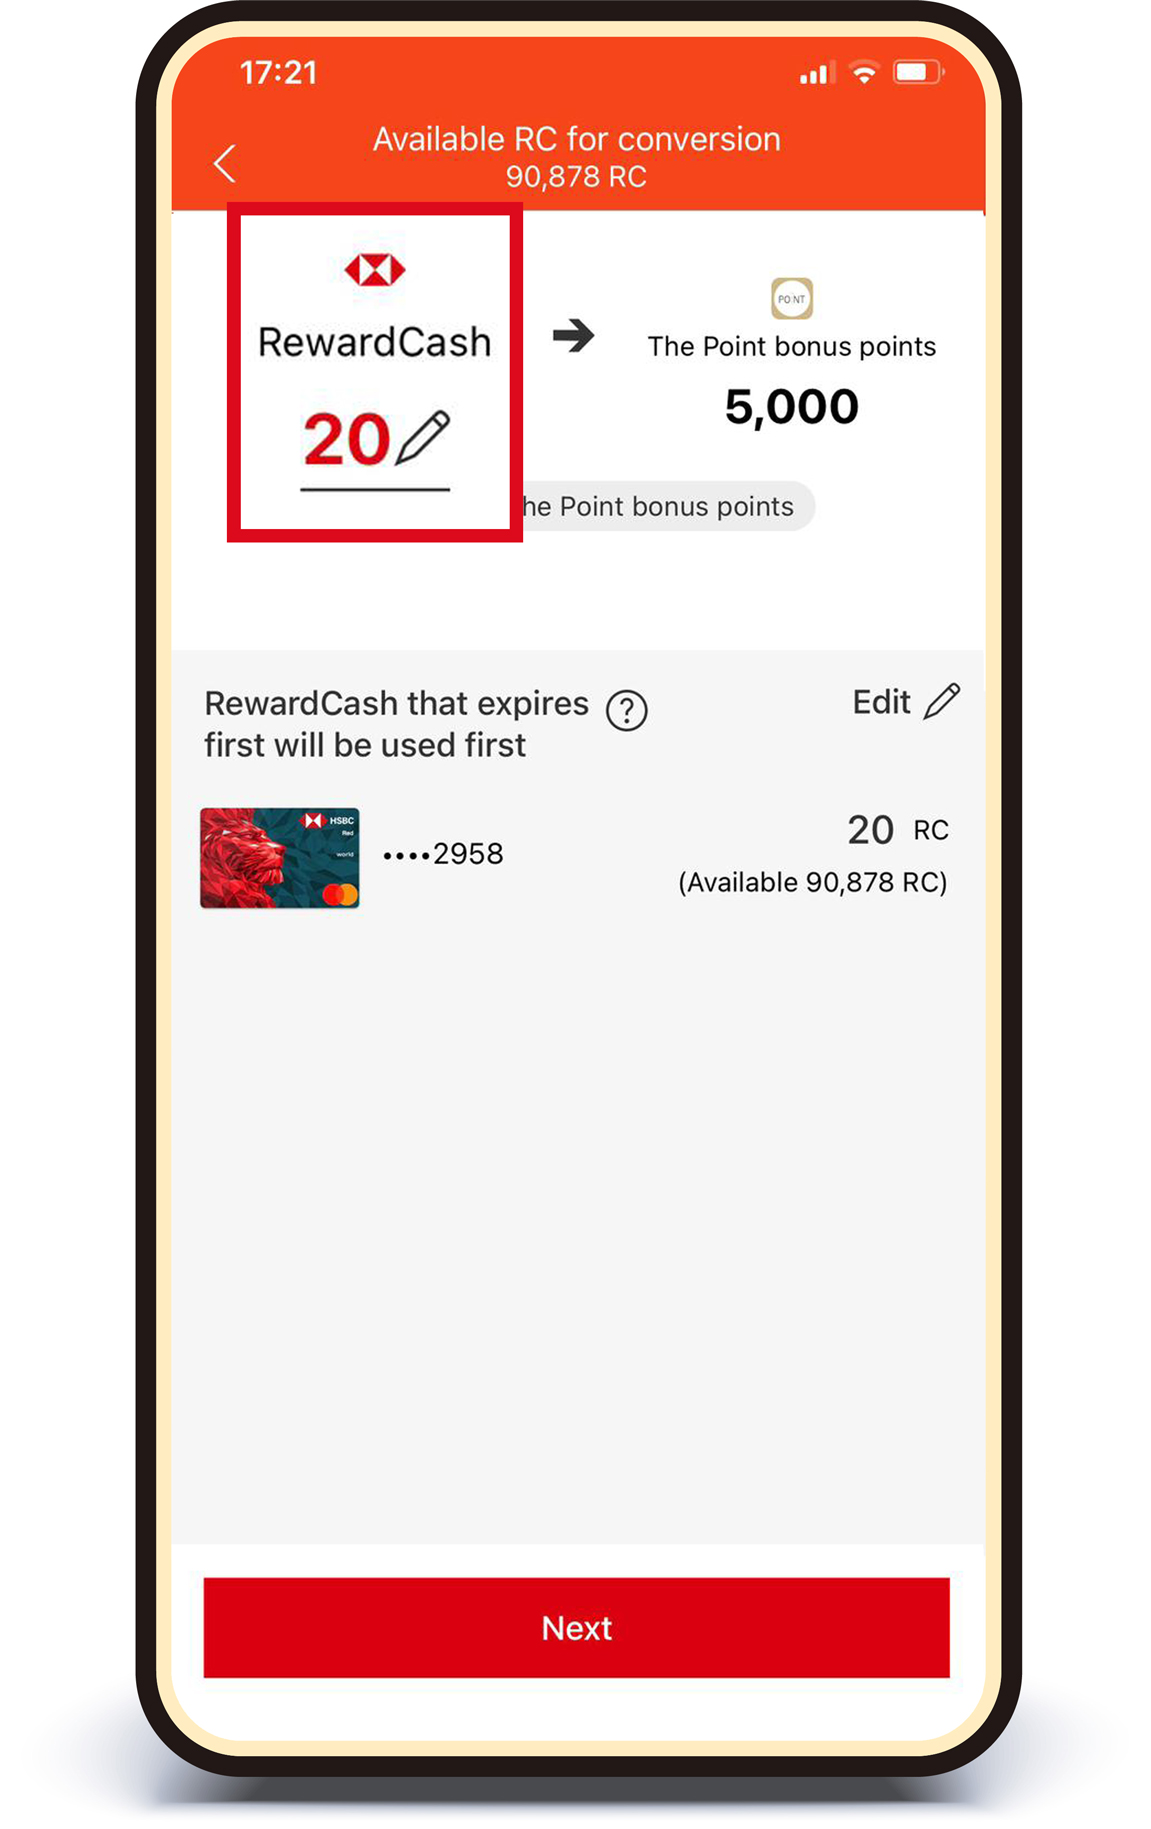 SHKP Malls x HSBC Reward+ RewardCash Conversion Offer